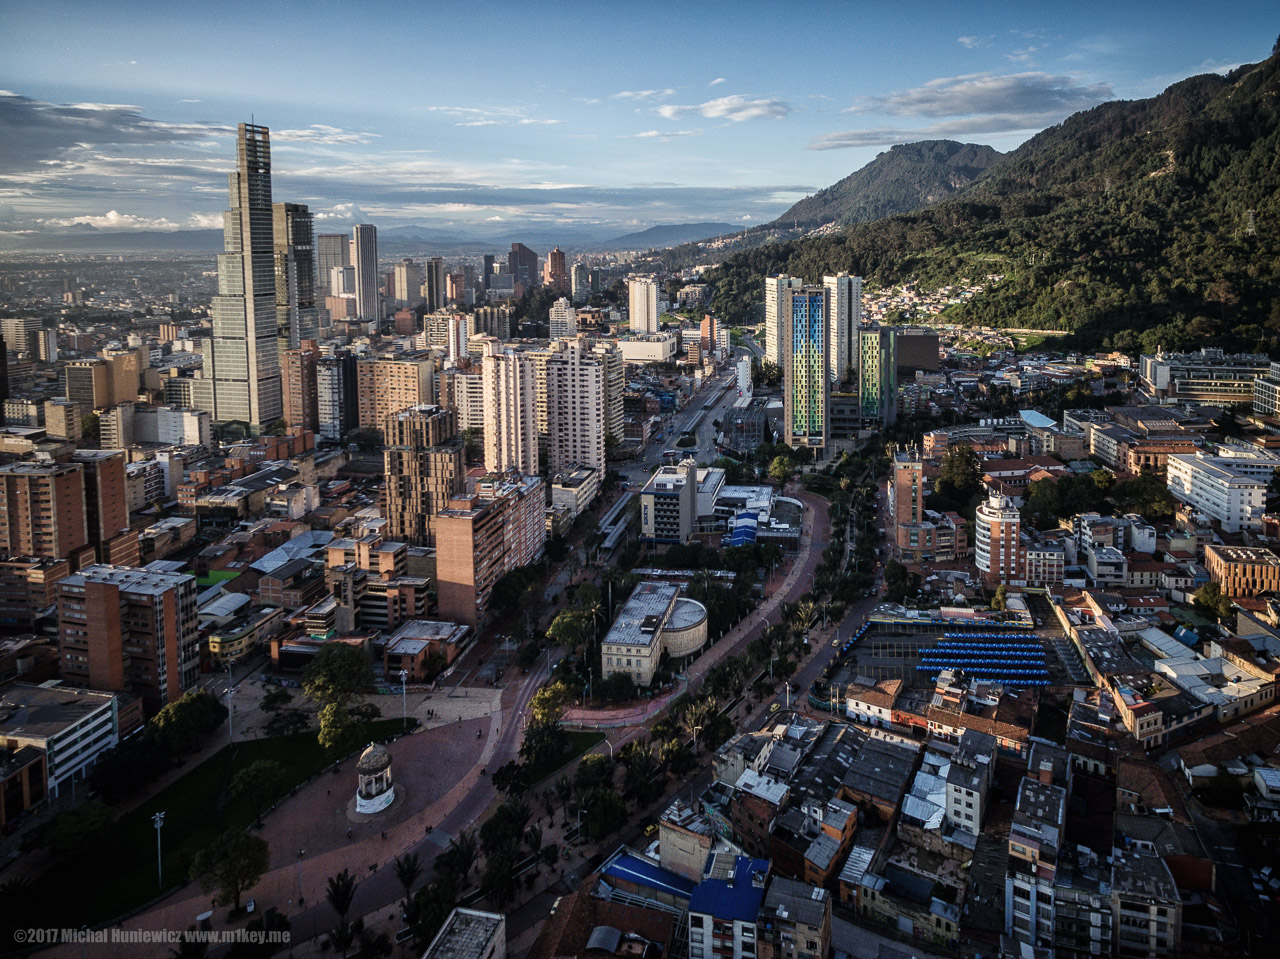 Central Bogotá